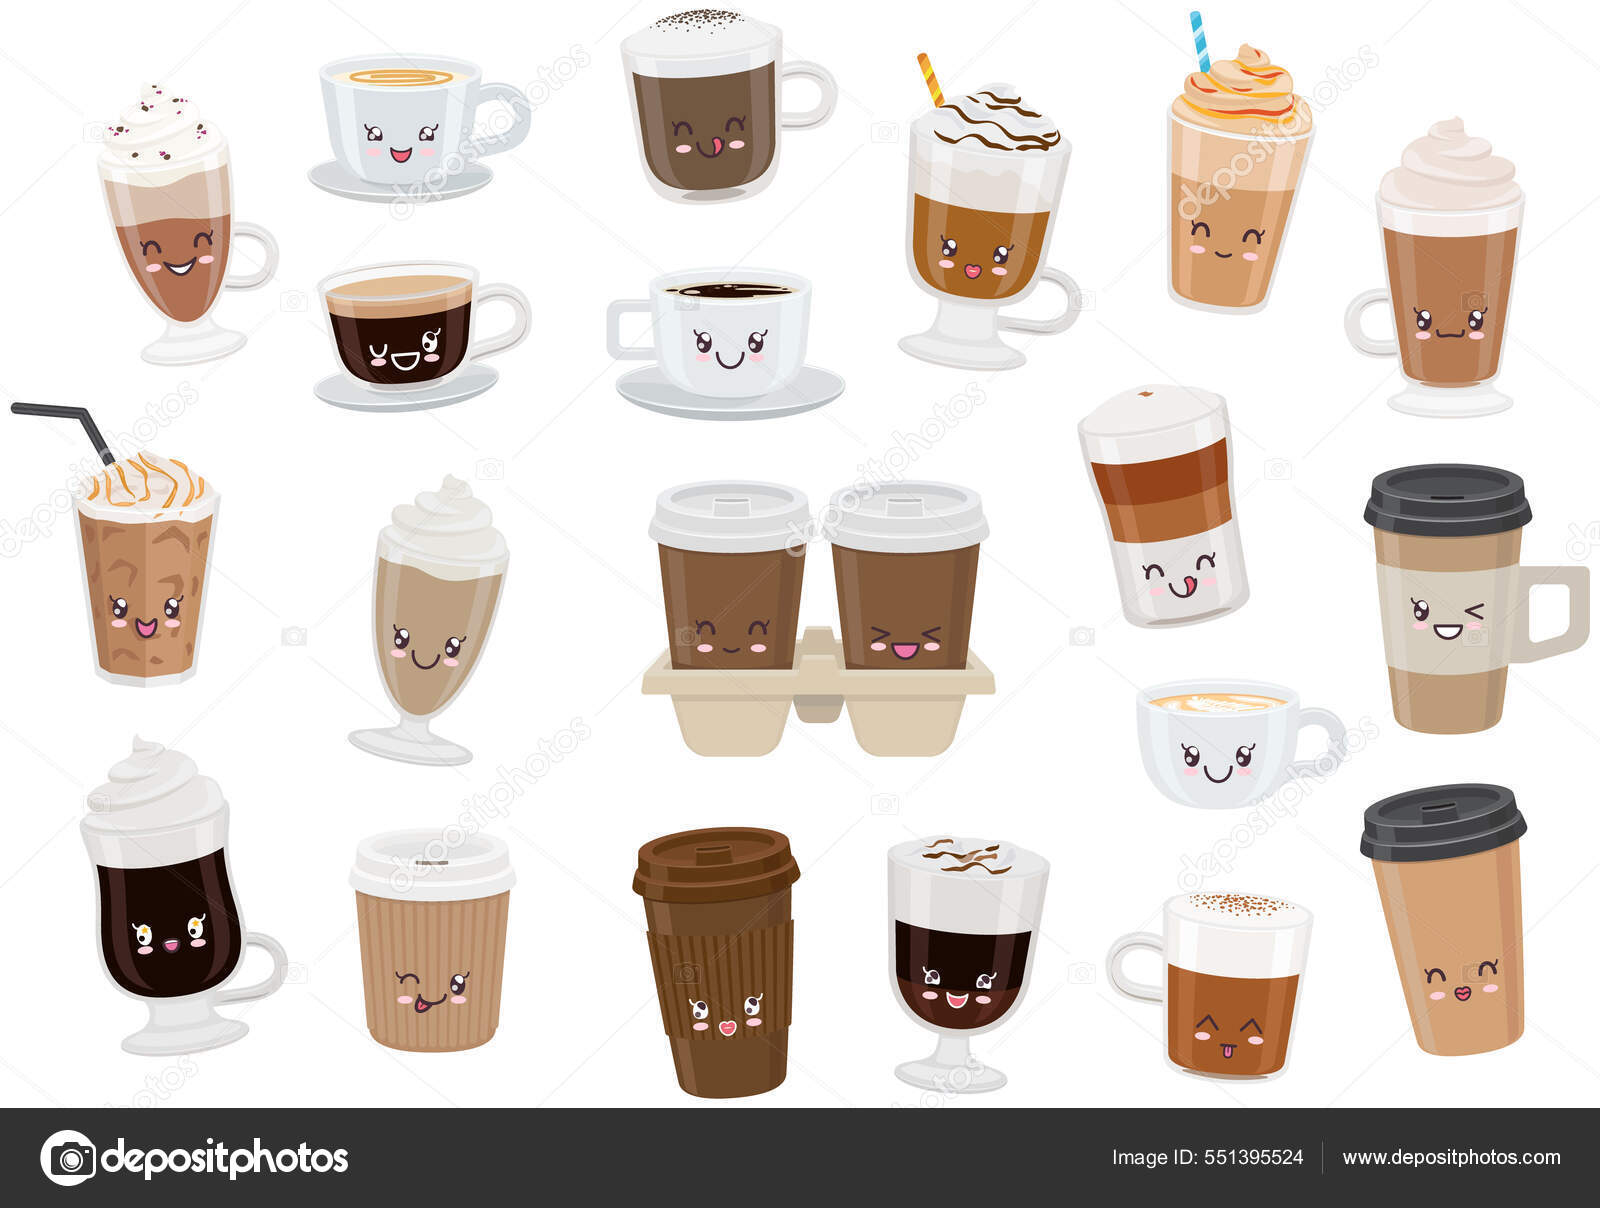 Hot Cup of kawaii cute coffee - NeatoShop